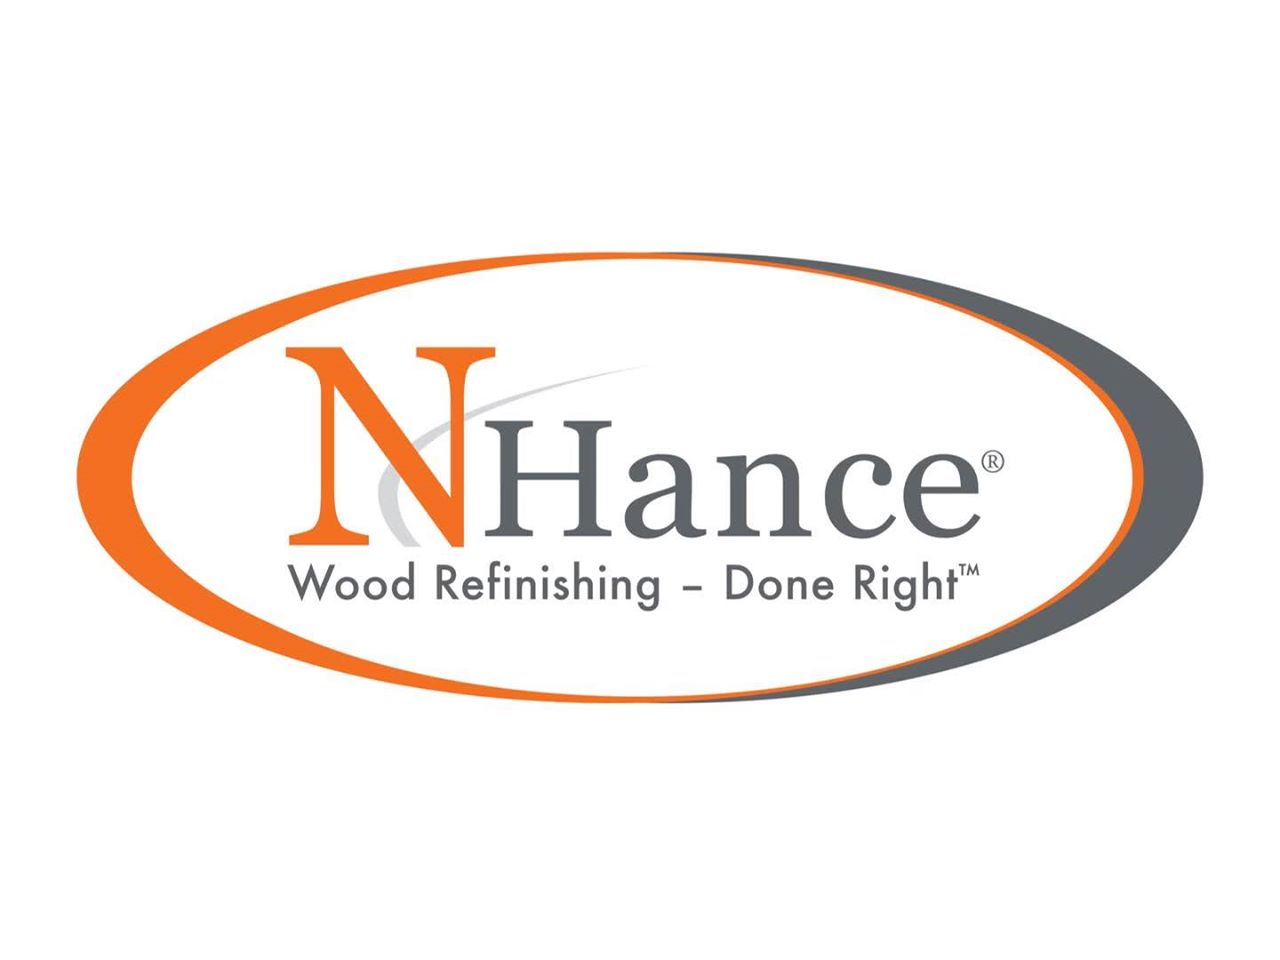 N-Hance Wood Refinishing - Cincinnati Logo